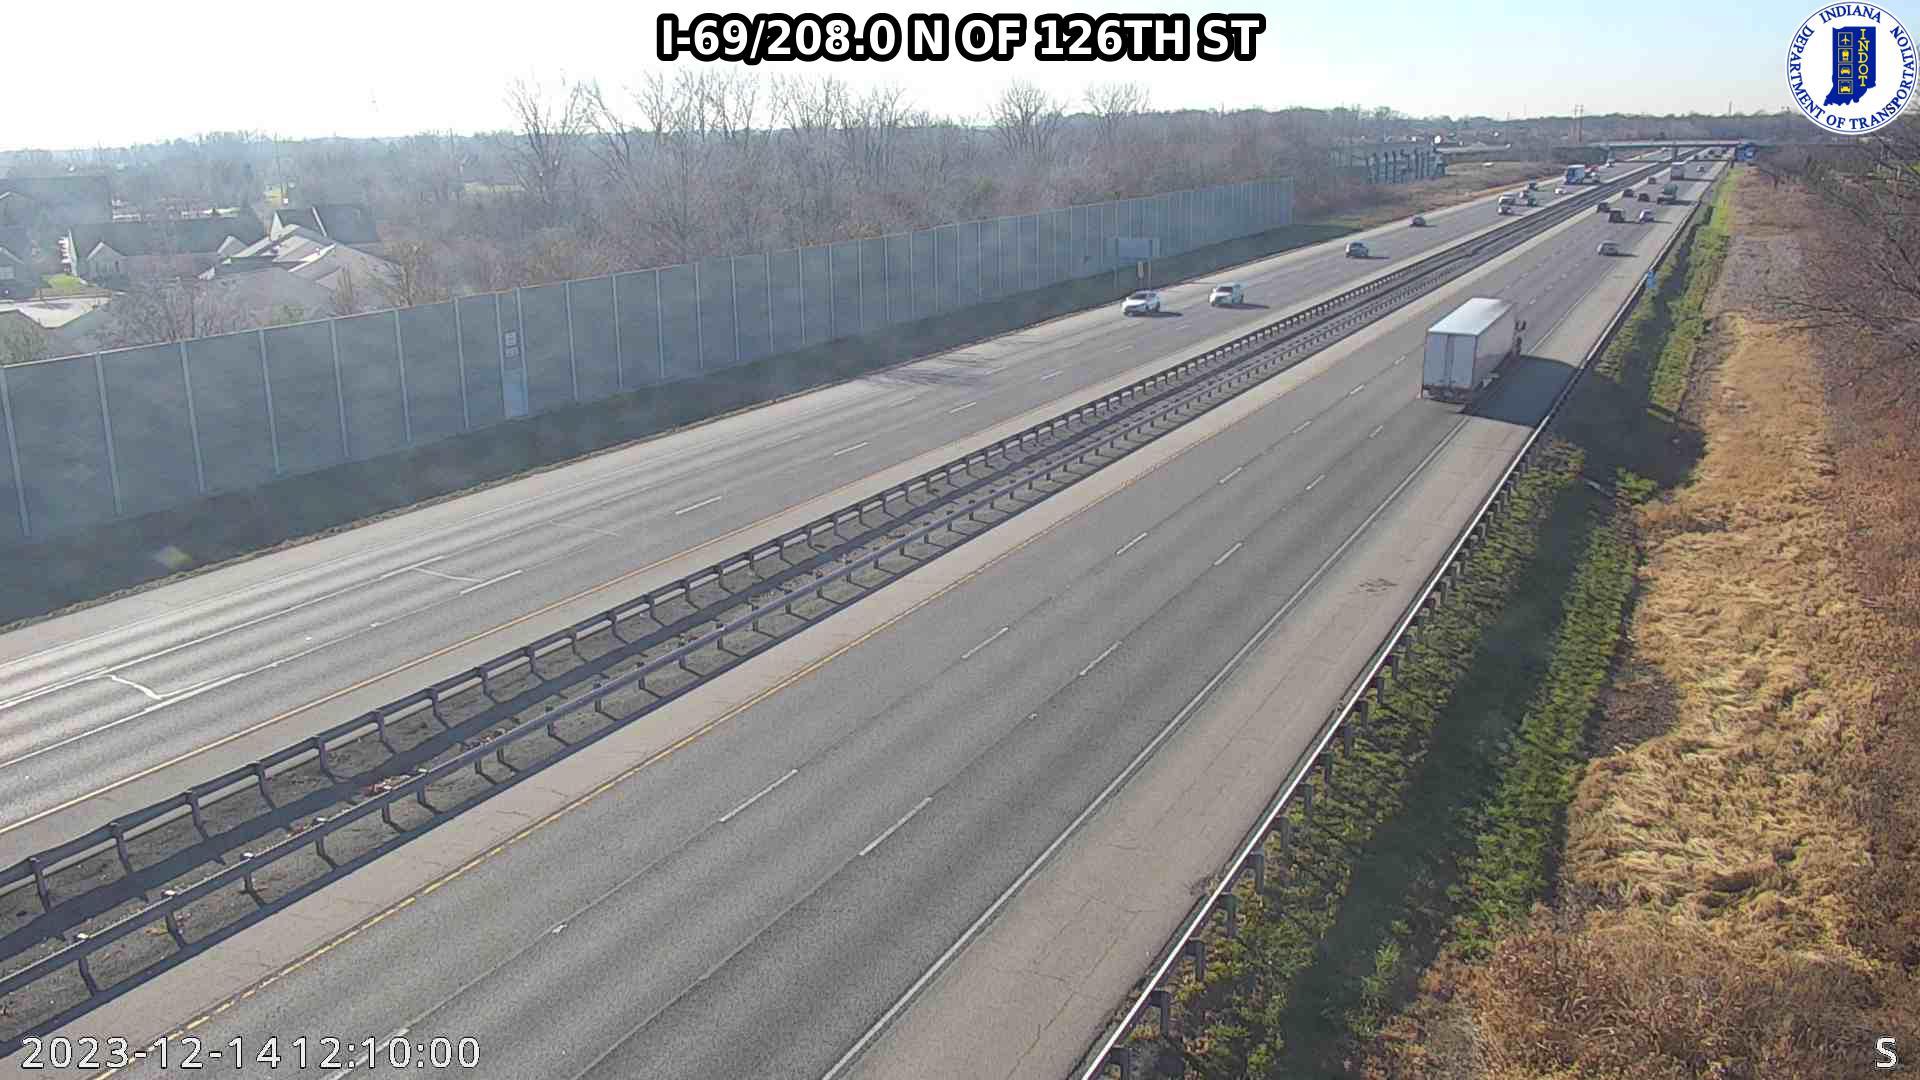 Olio: I-69: I-69/208.0 N OF 126TH ST Traffic Camera